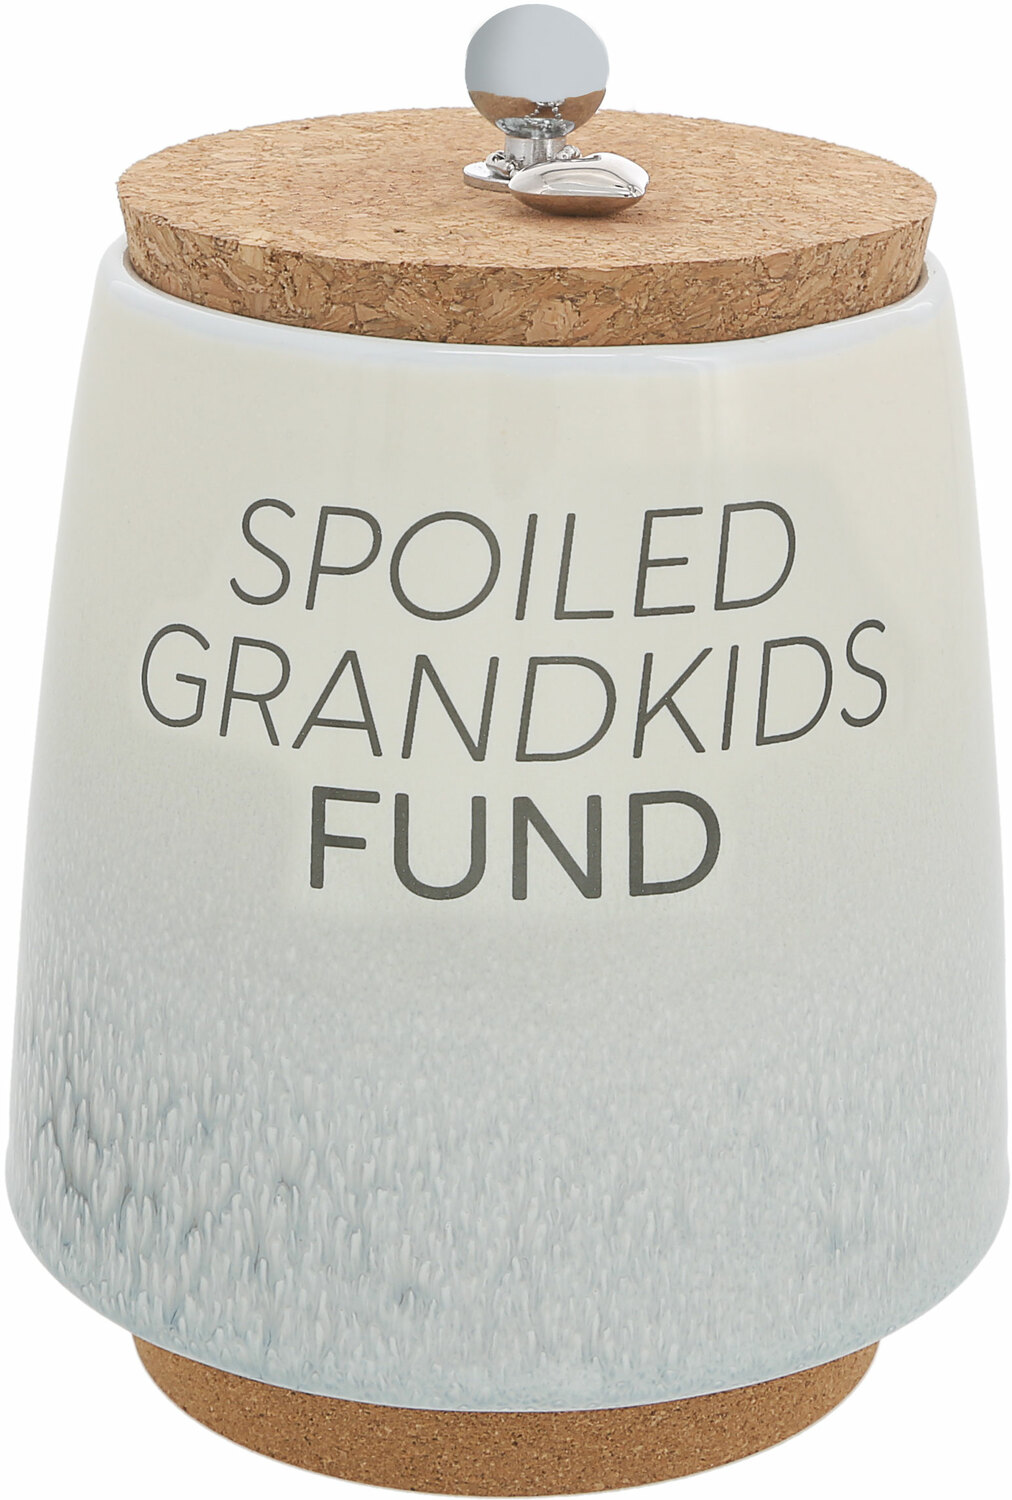 Spoiled Grandkids by So Much Fun-d - Spoiled Grandkids - 6.5" Ceramic Savings Bank